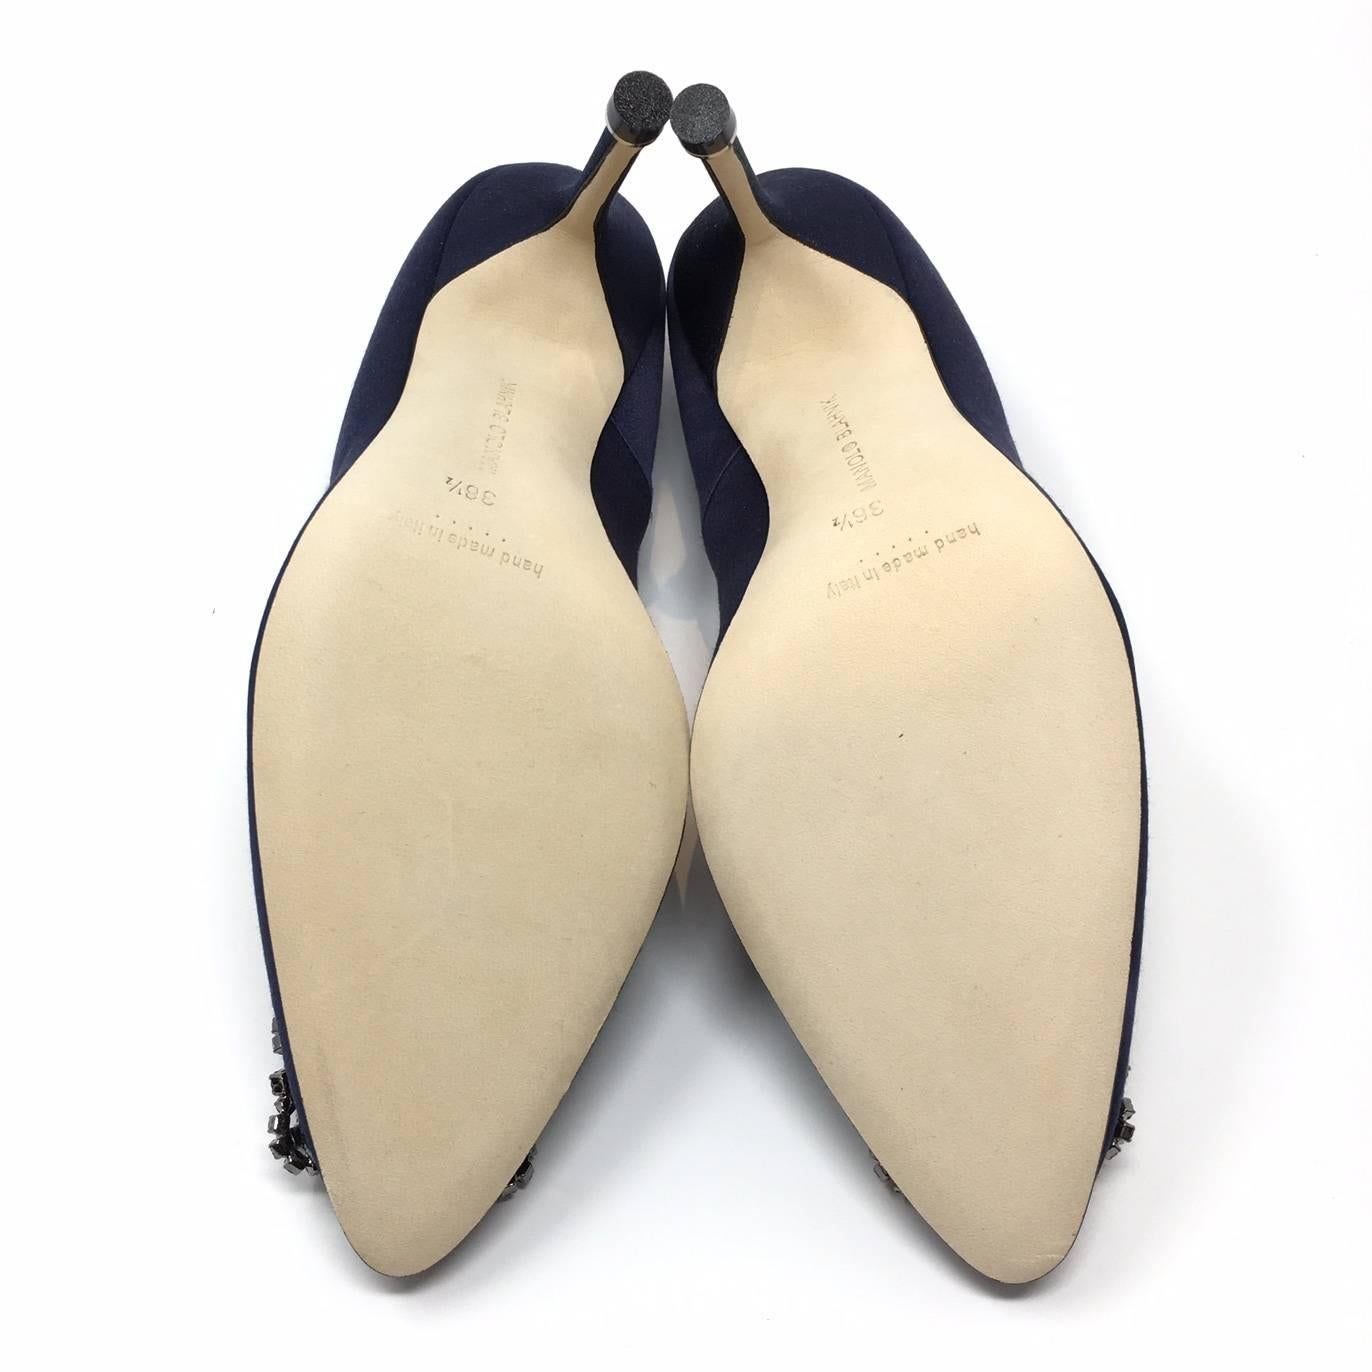 Manolo Blahnik
Hangs Embellished Pump
Satin Dark Bluen
Size 36 1/2 
9 cm Heels 
Like new conditions with box